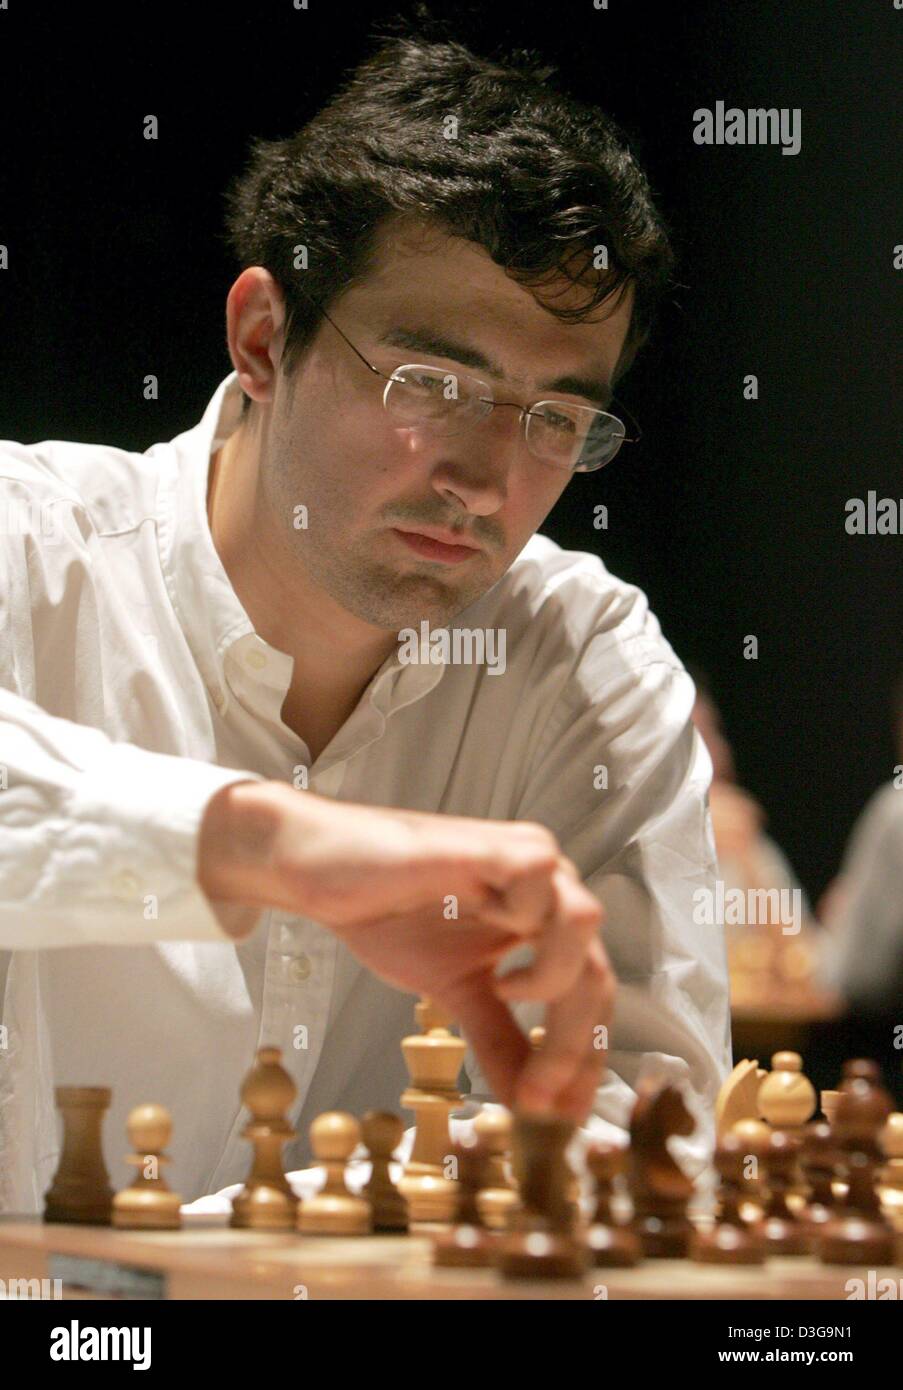 Anand - Kramnik World Championship Match (2008) chess event